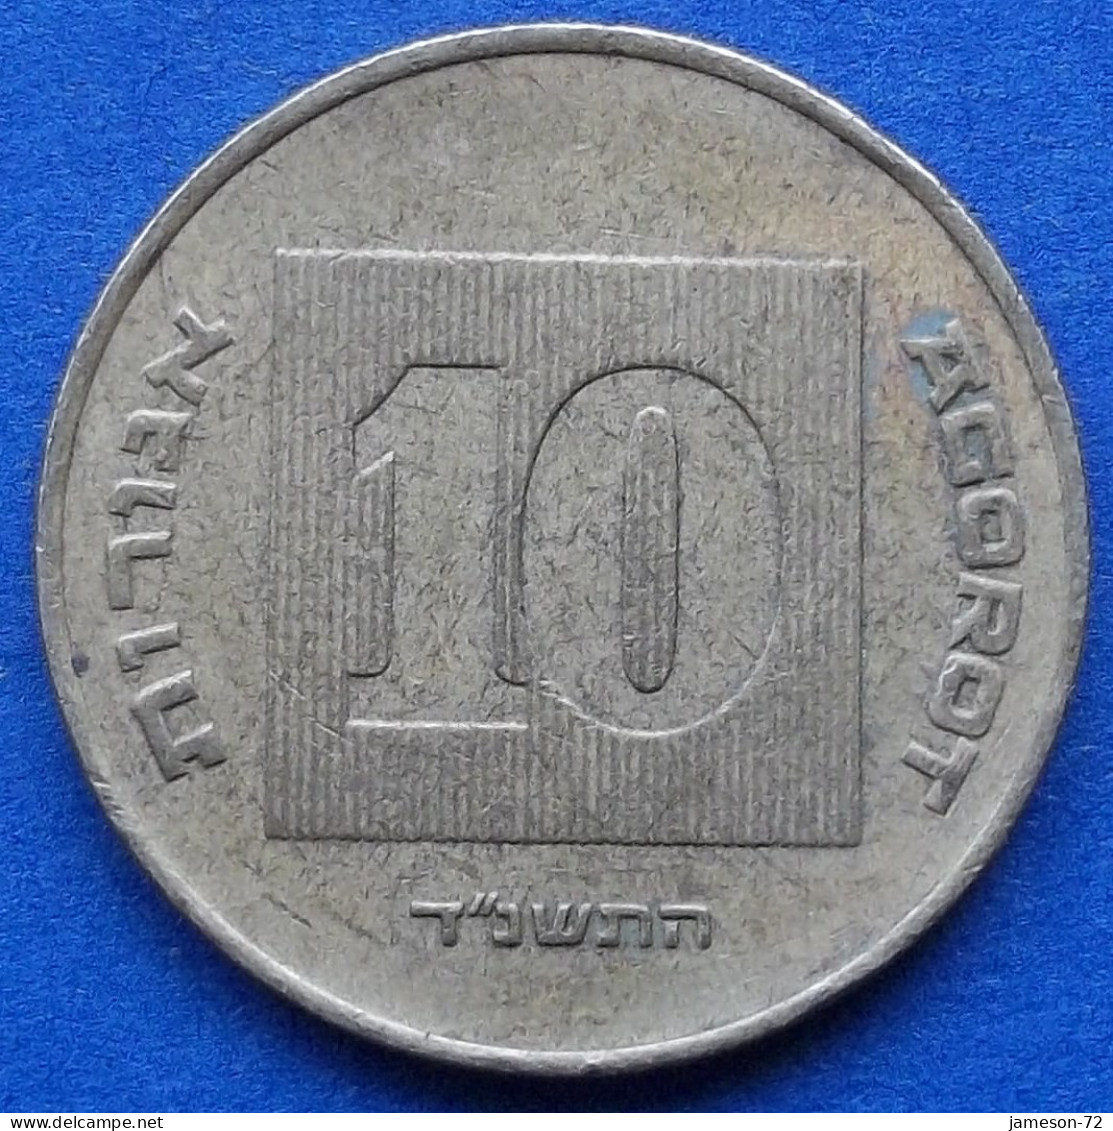 ISRAEL - 10 Agorot JE 5754 (1994AD) "Menorah" KM# 158 Monetary Reform (1985) - Edelweiss Coins - Israel